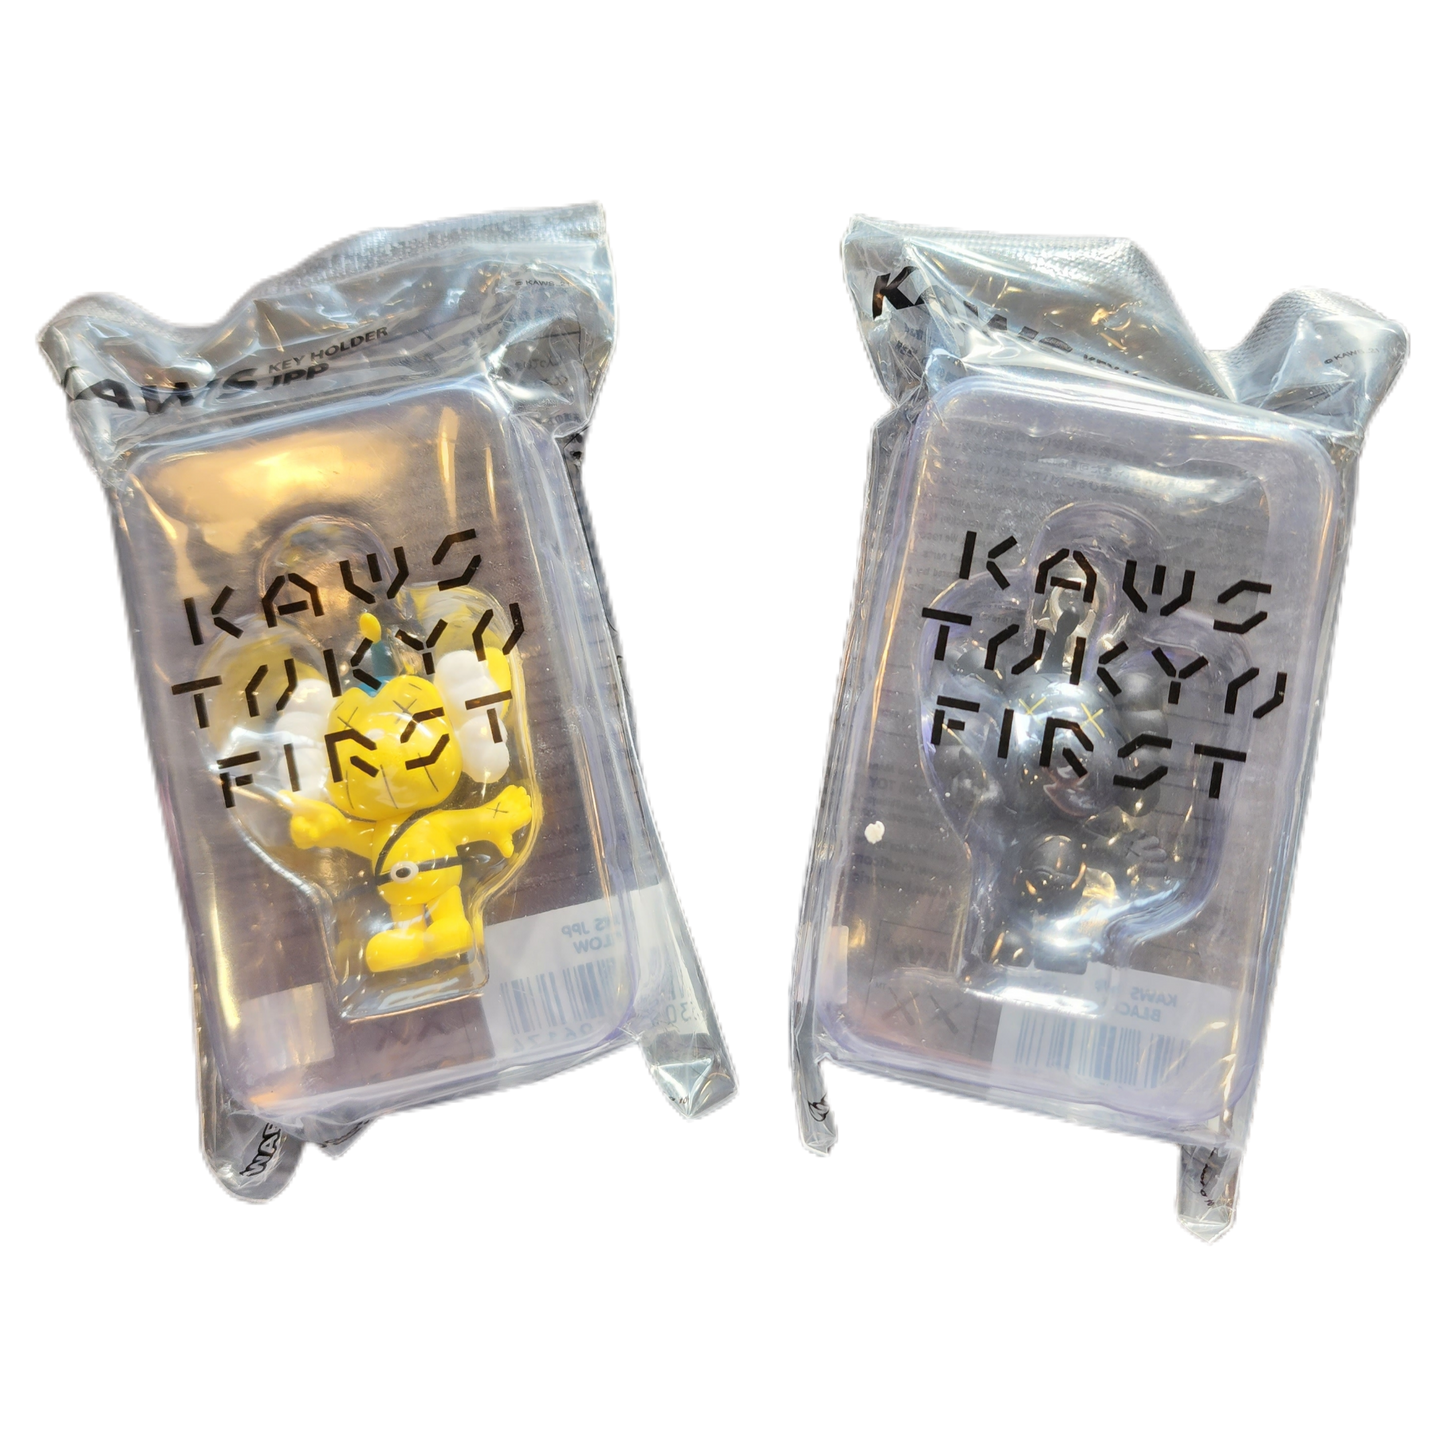 Kaws - "Tokyo First JPP" - Keychain